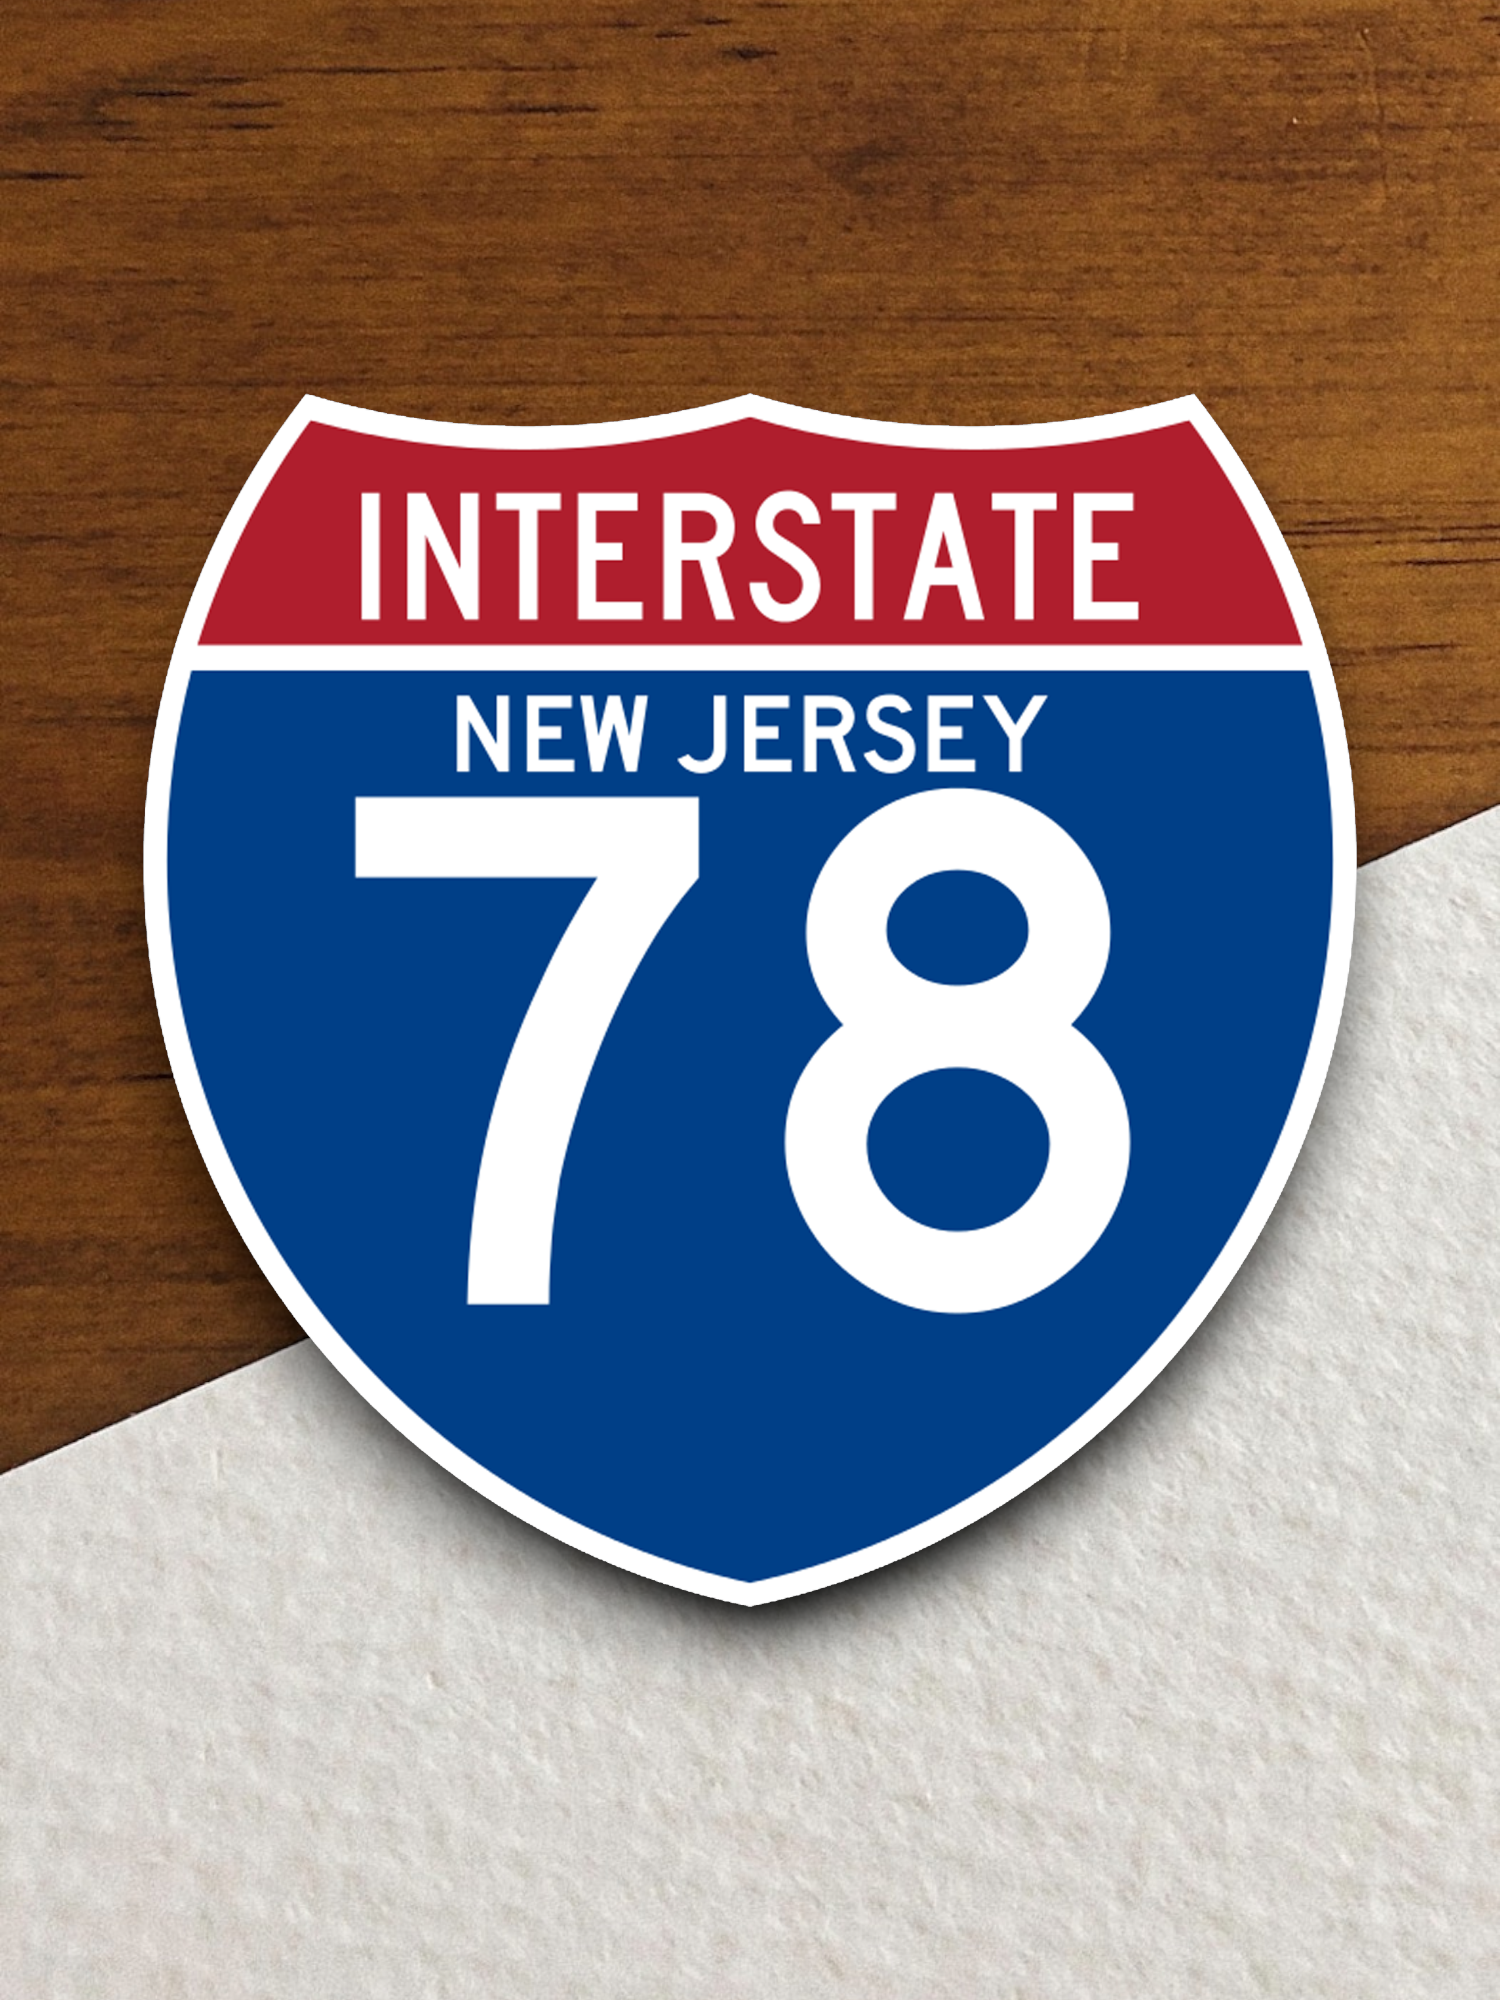 Interstate I-78 New Jersey - Road Sign Sticker